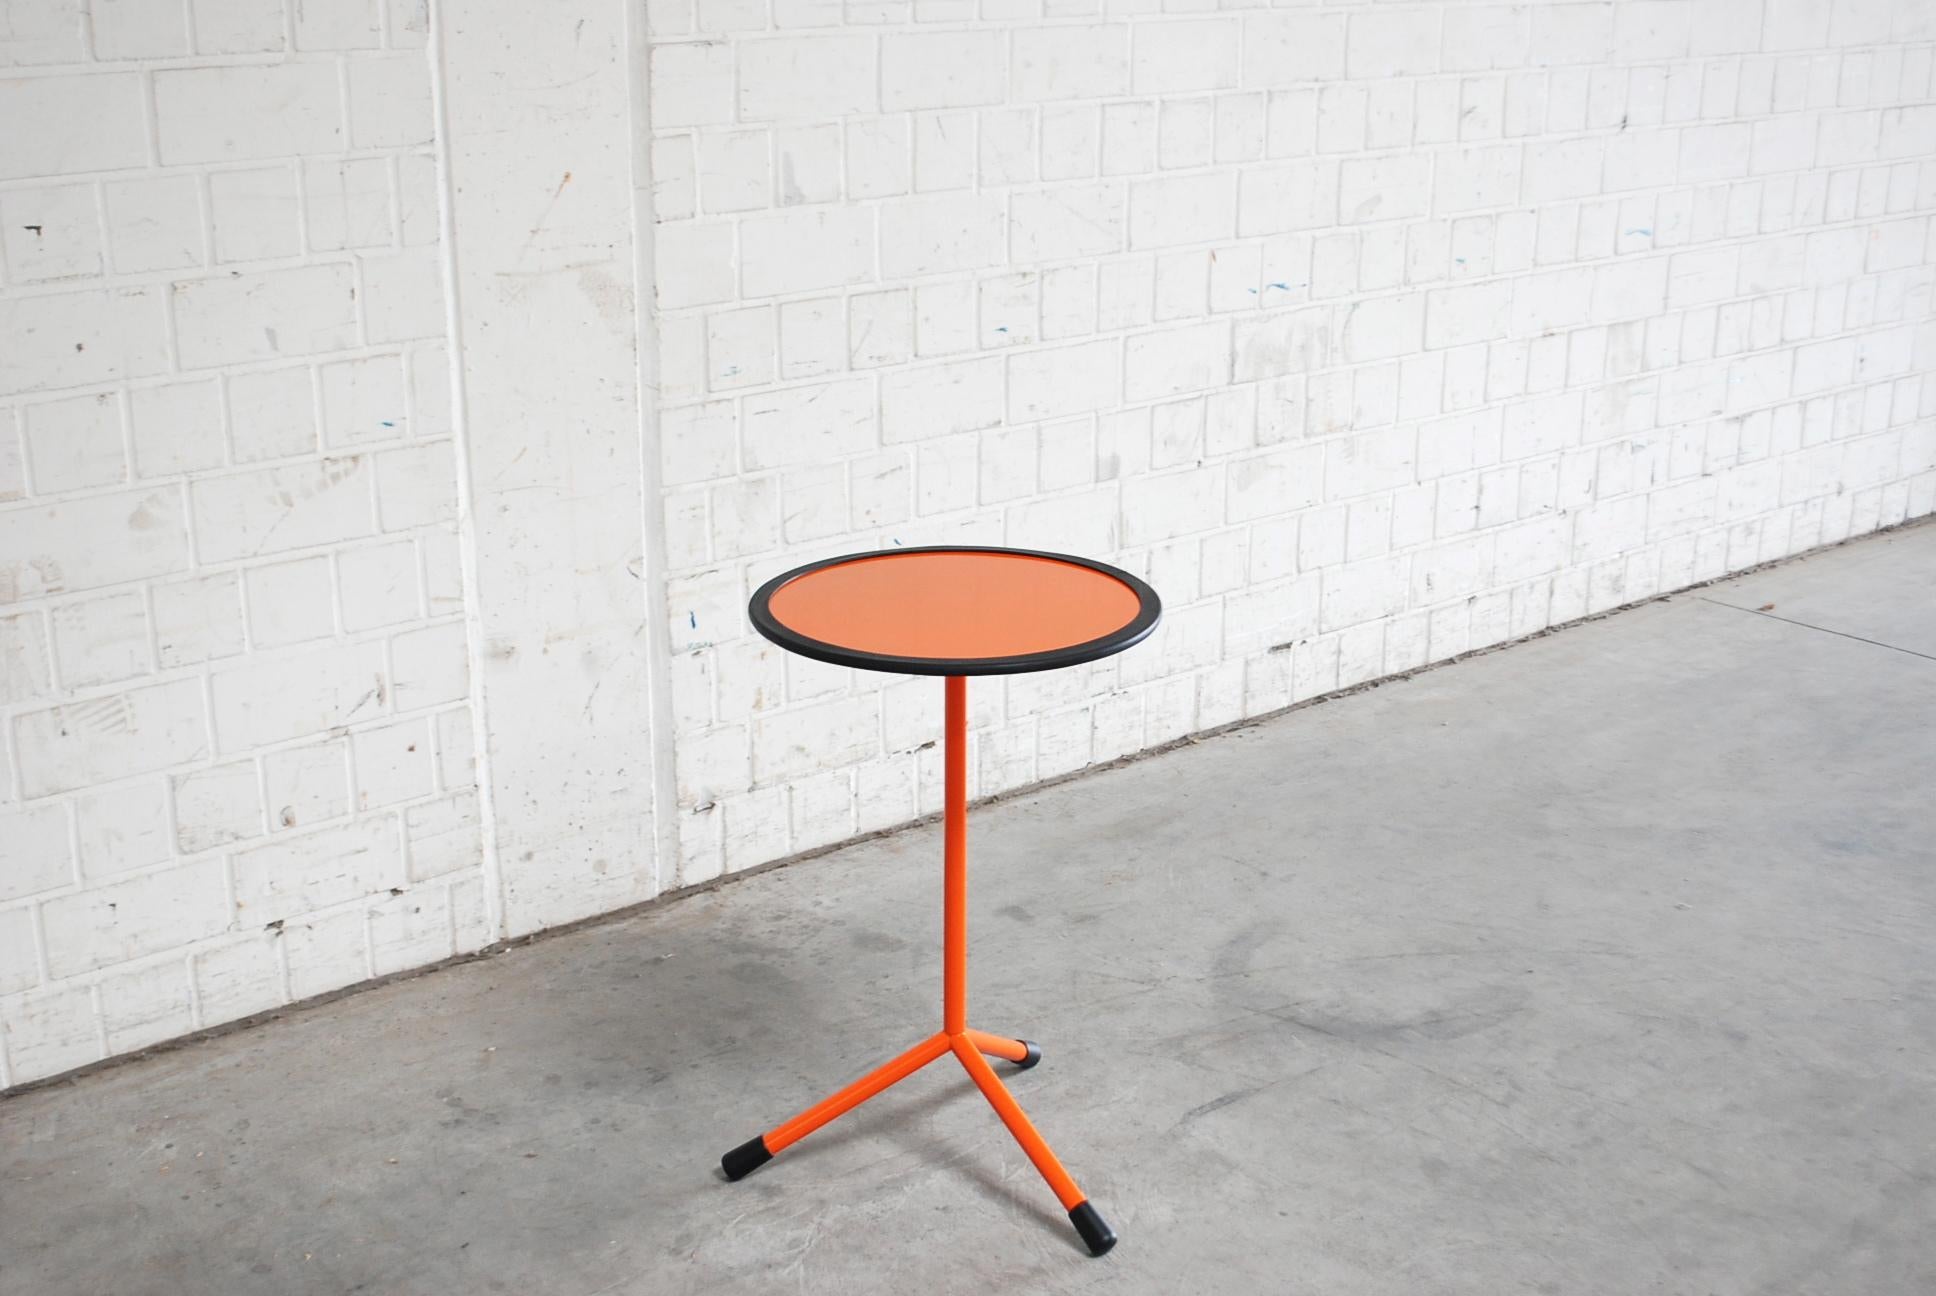 Lacquered Schellmann Art Furniture Minimal Conceptual Orange Round Table